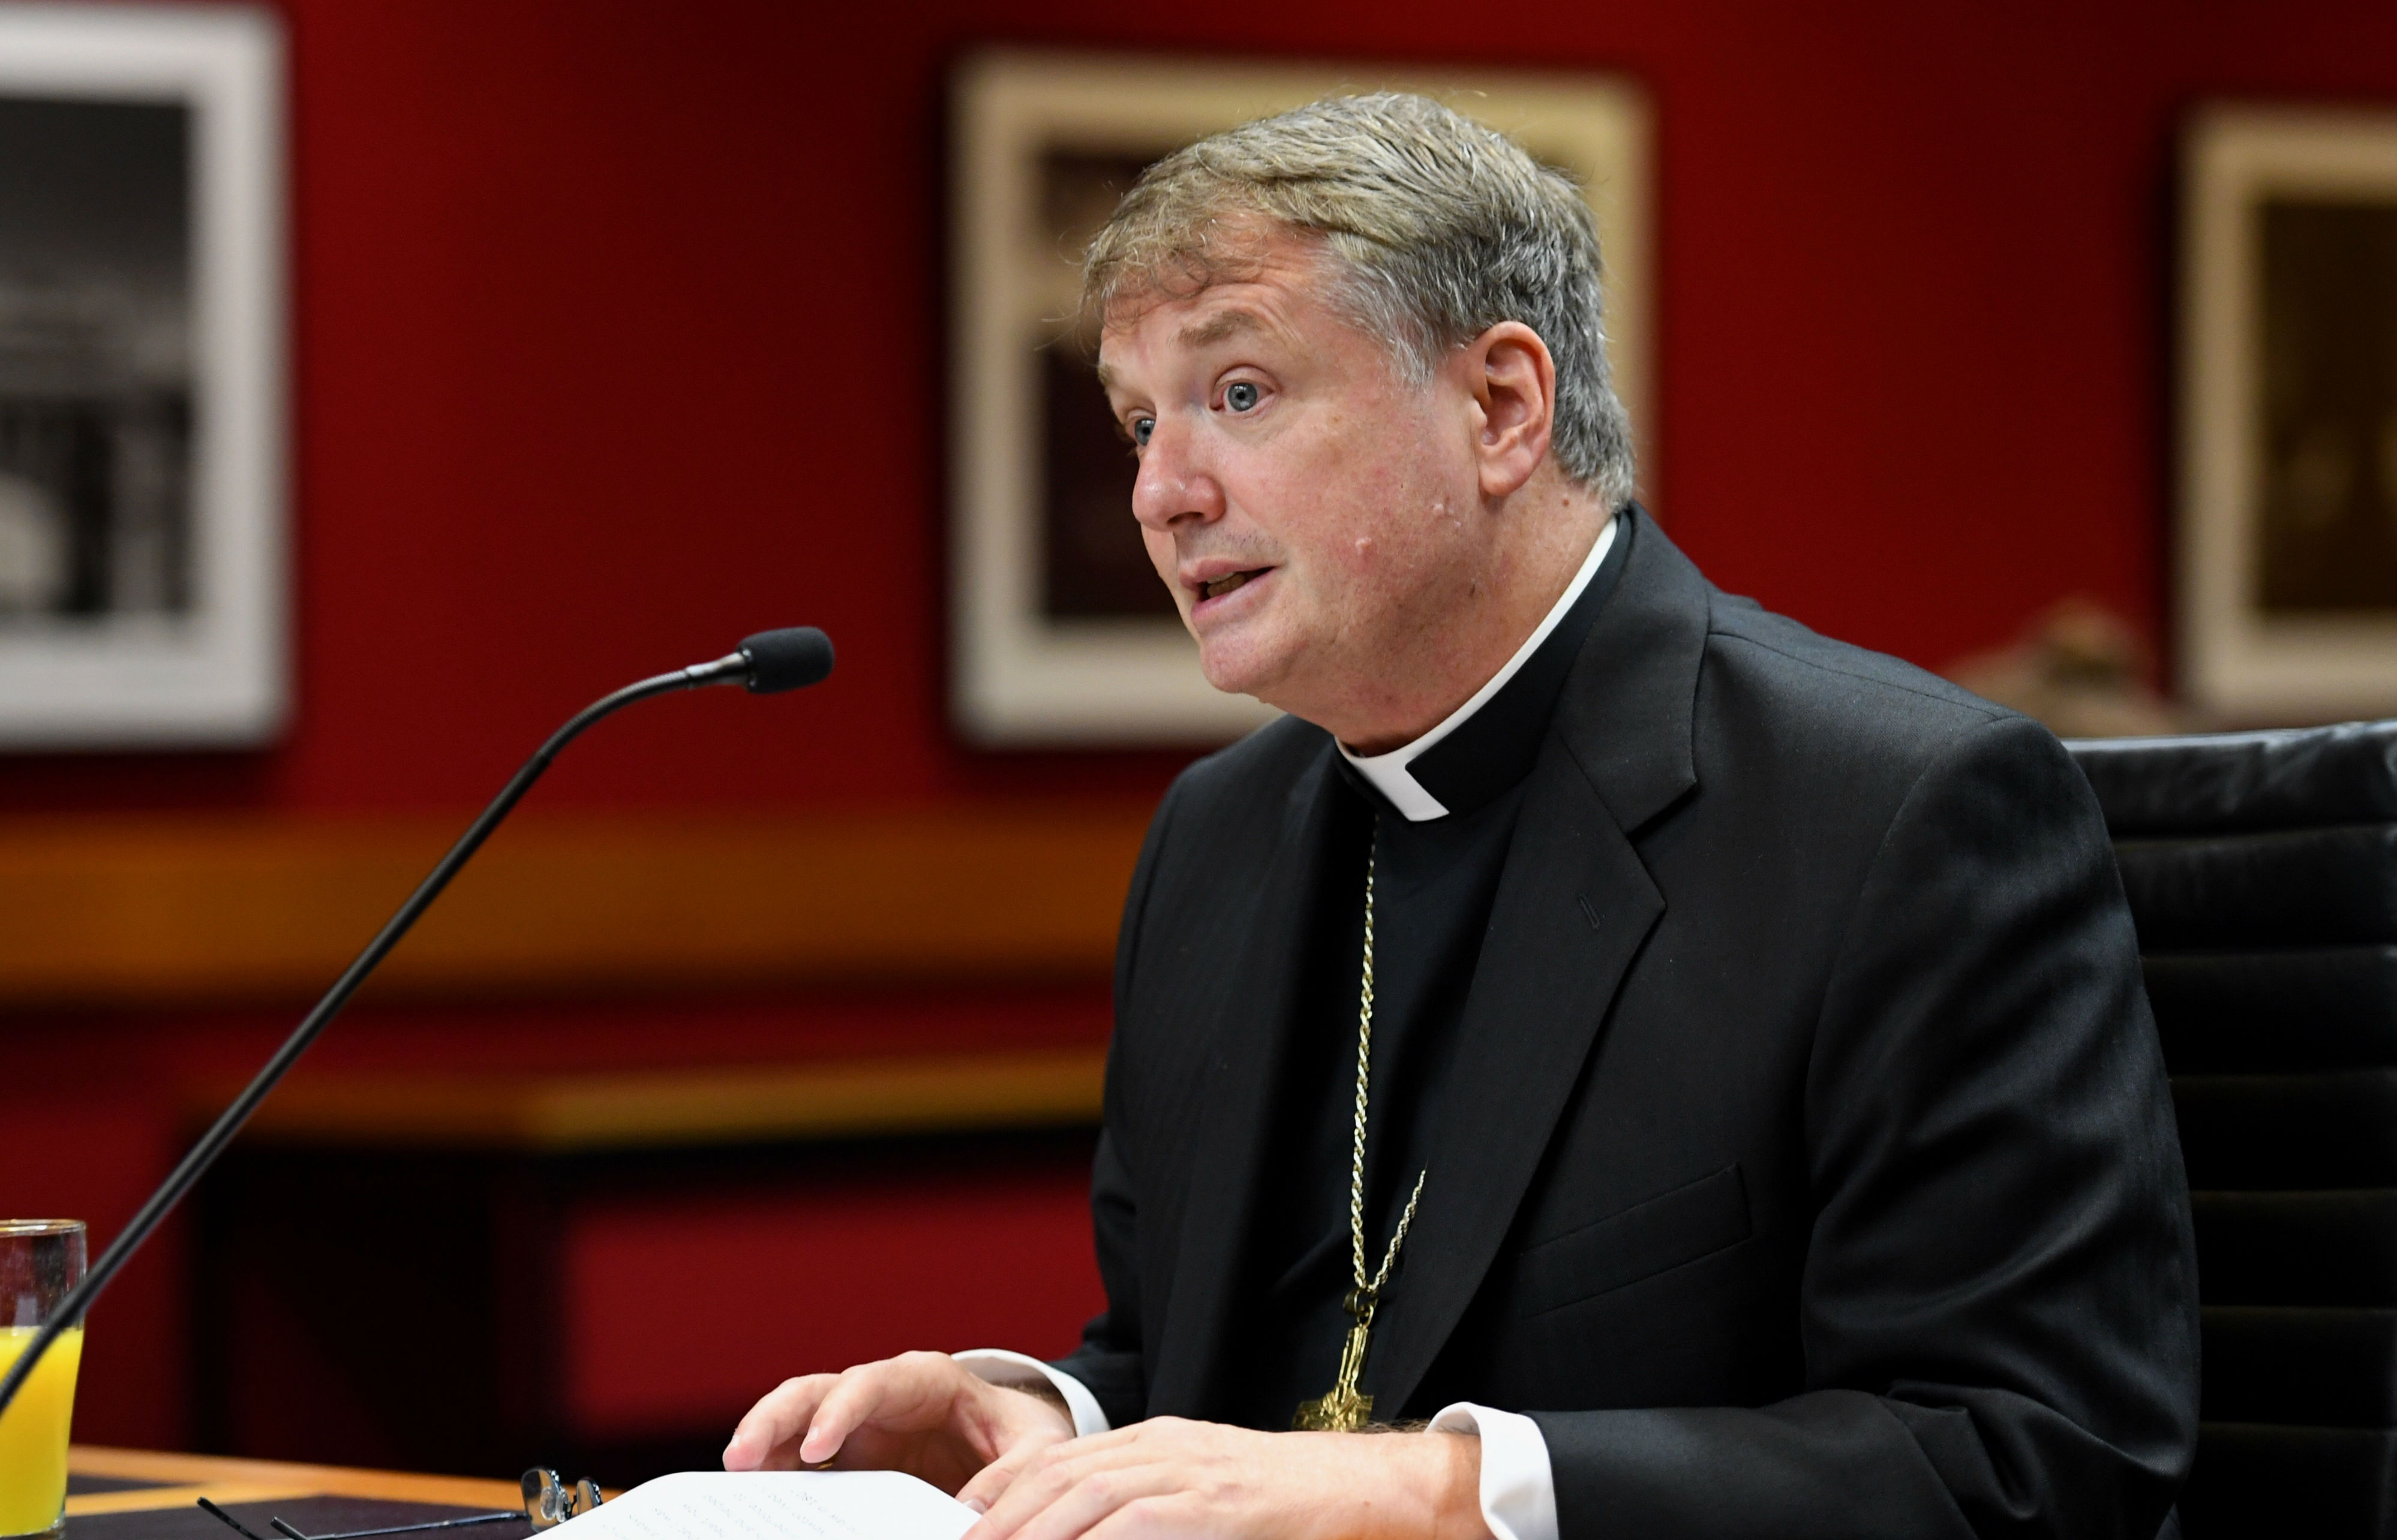   Same-sex marriage ‘would imperil free speech’, says Australian Archbishop 